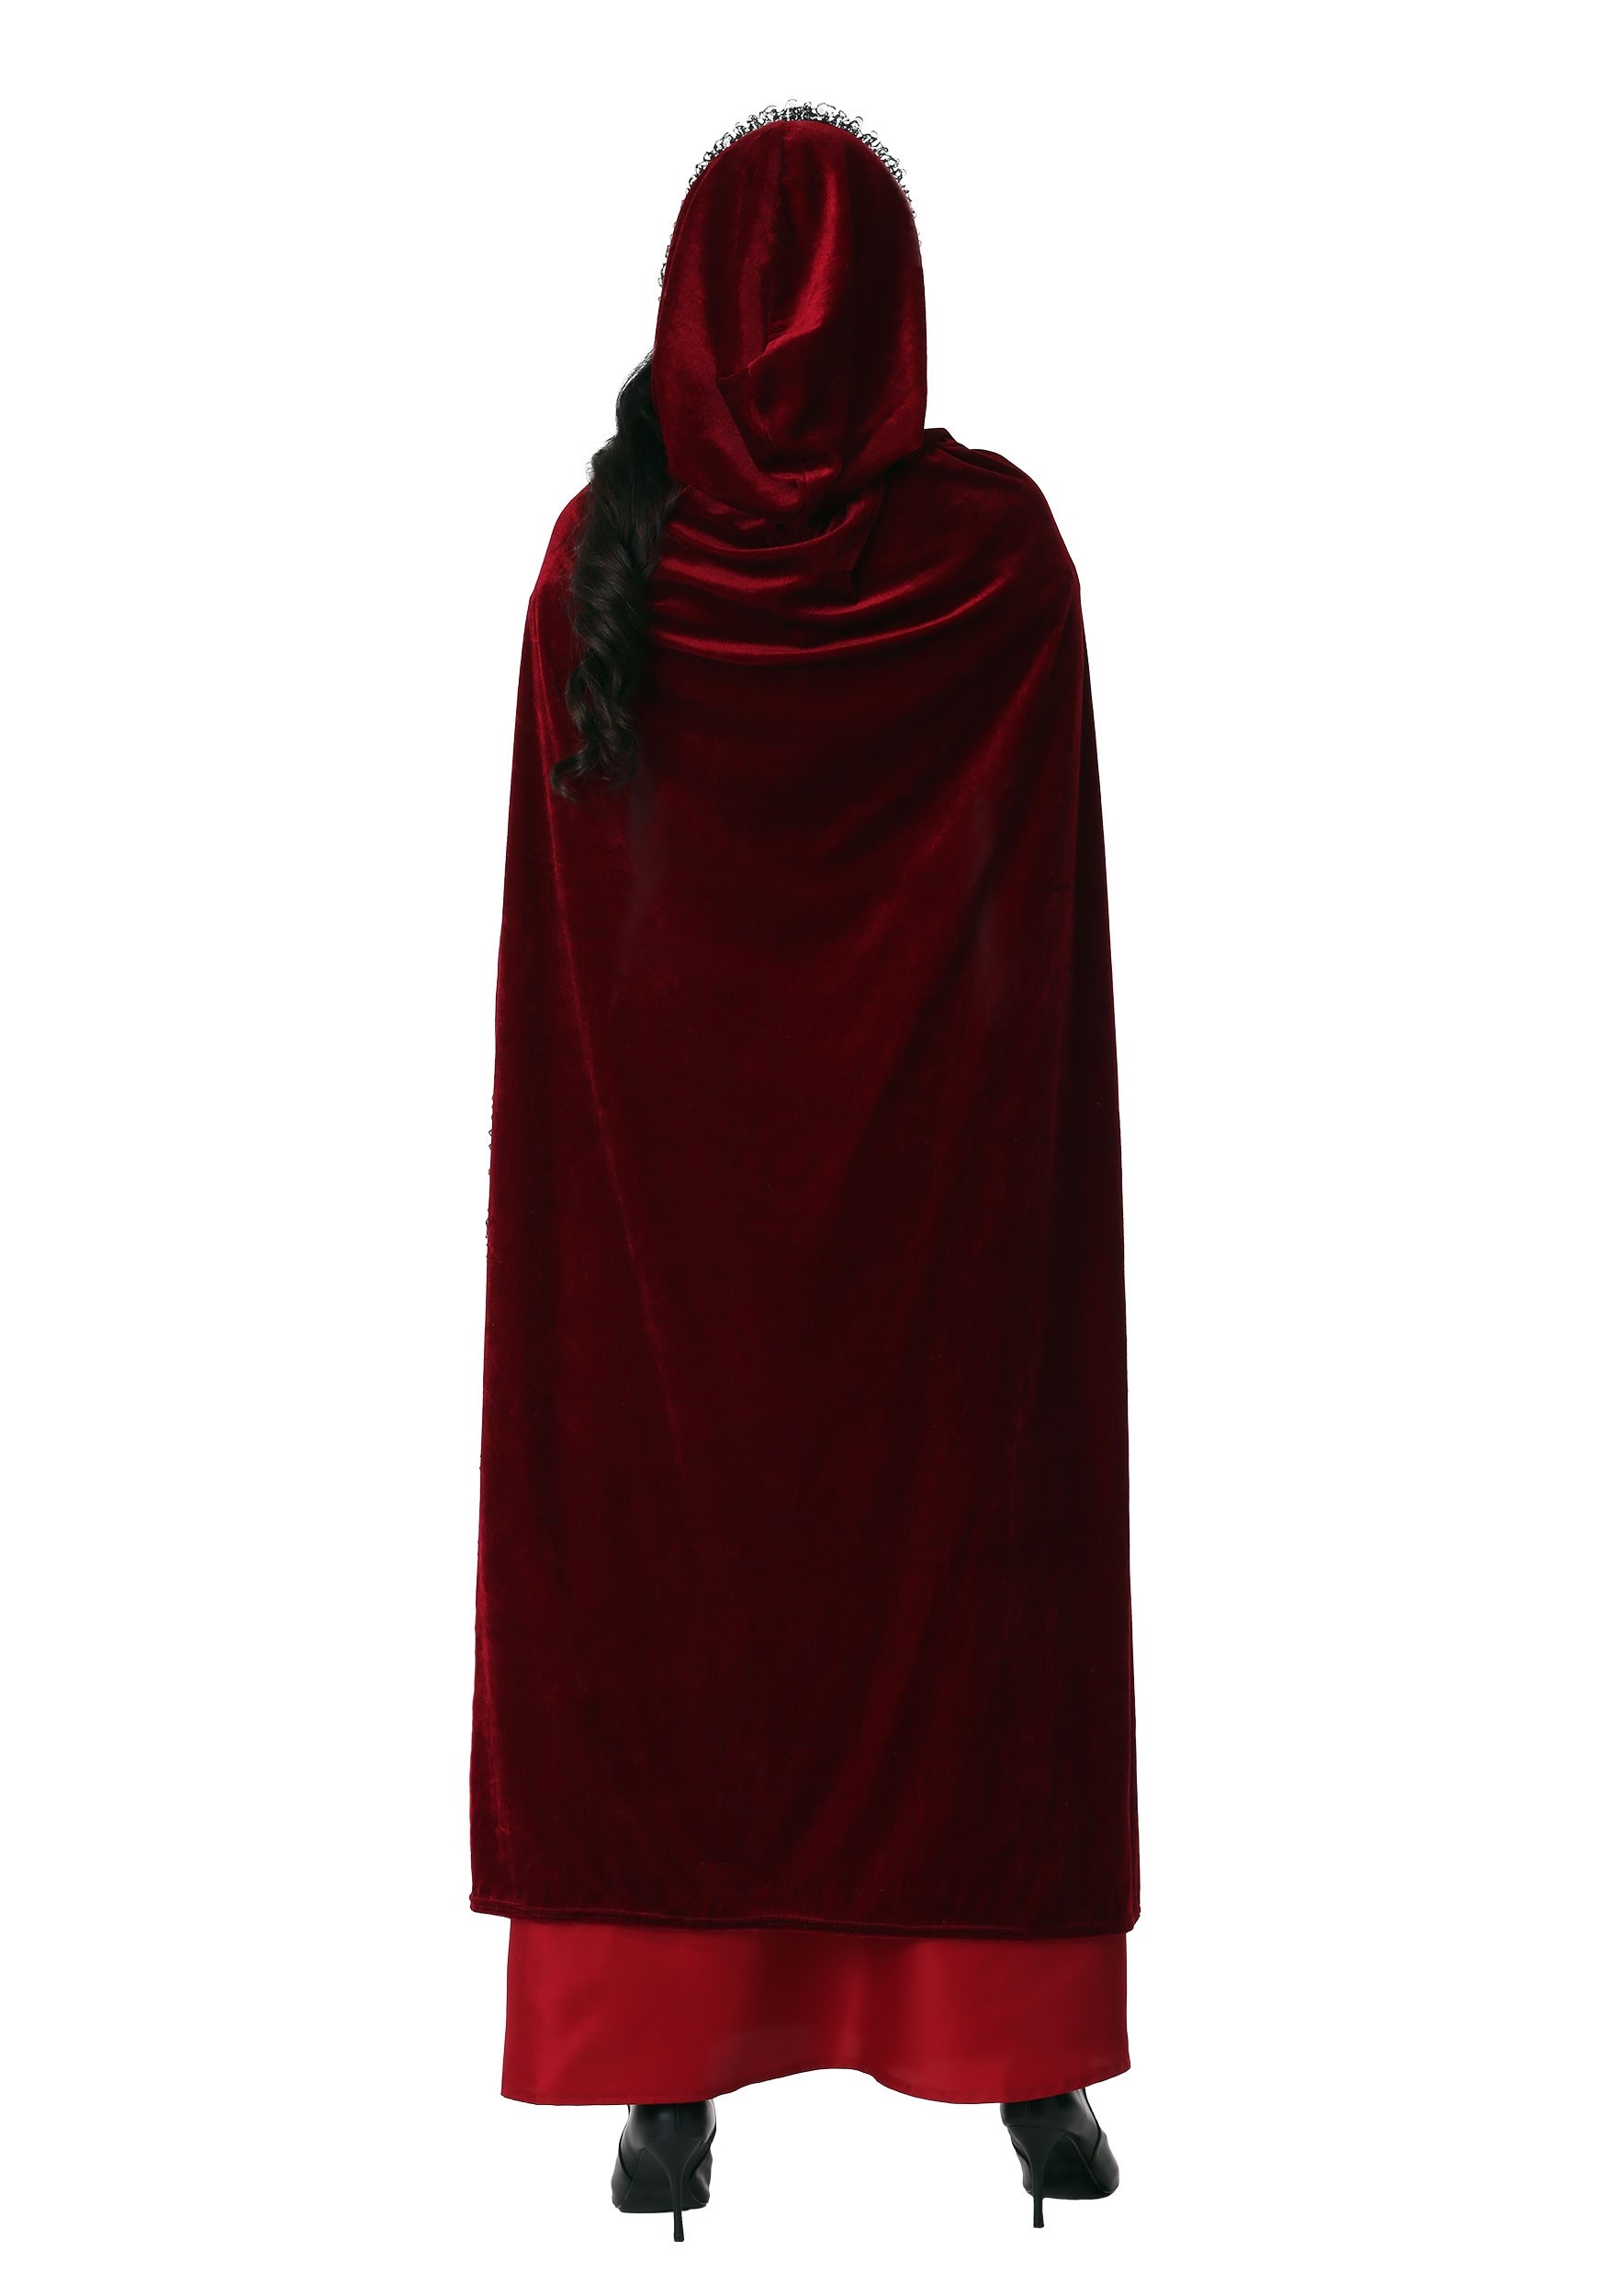 Women's Ravishing Red Riding Hood Costume